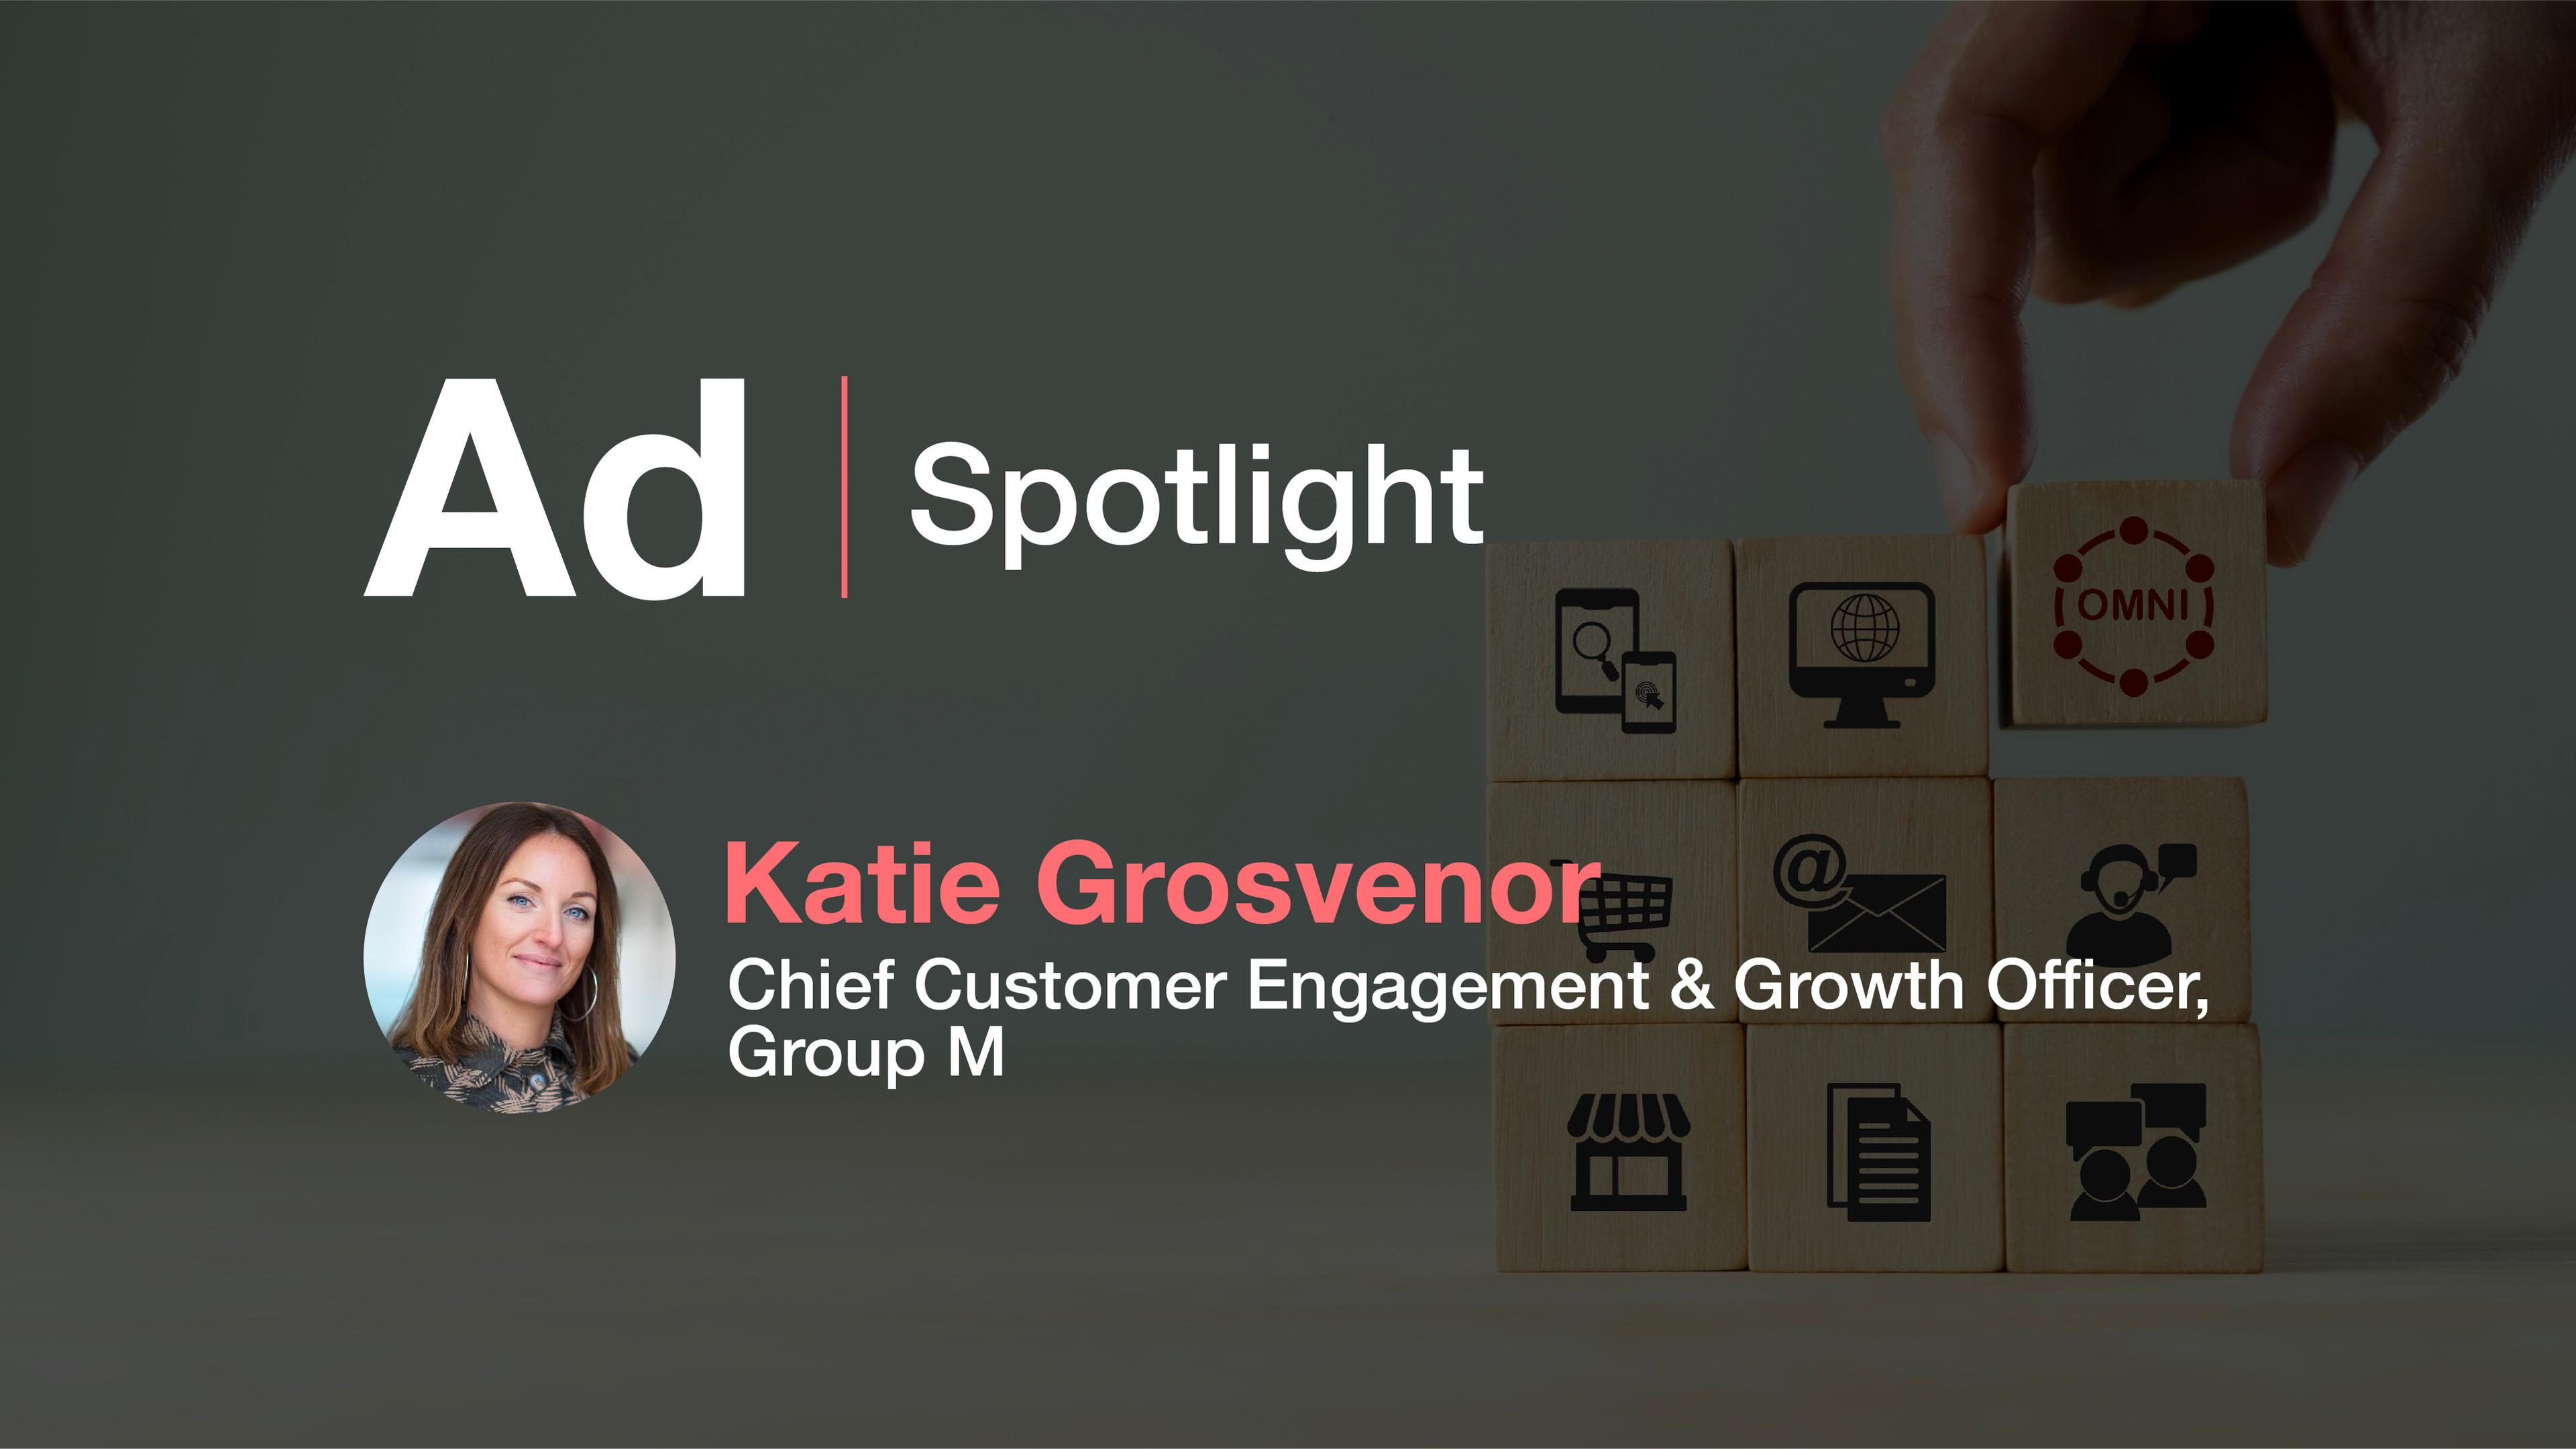 Ad Spotlight - Katie Grosvenor